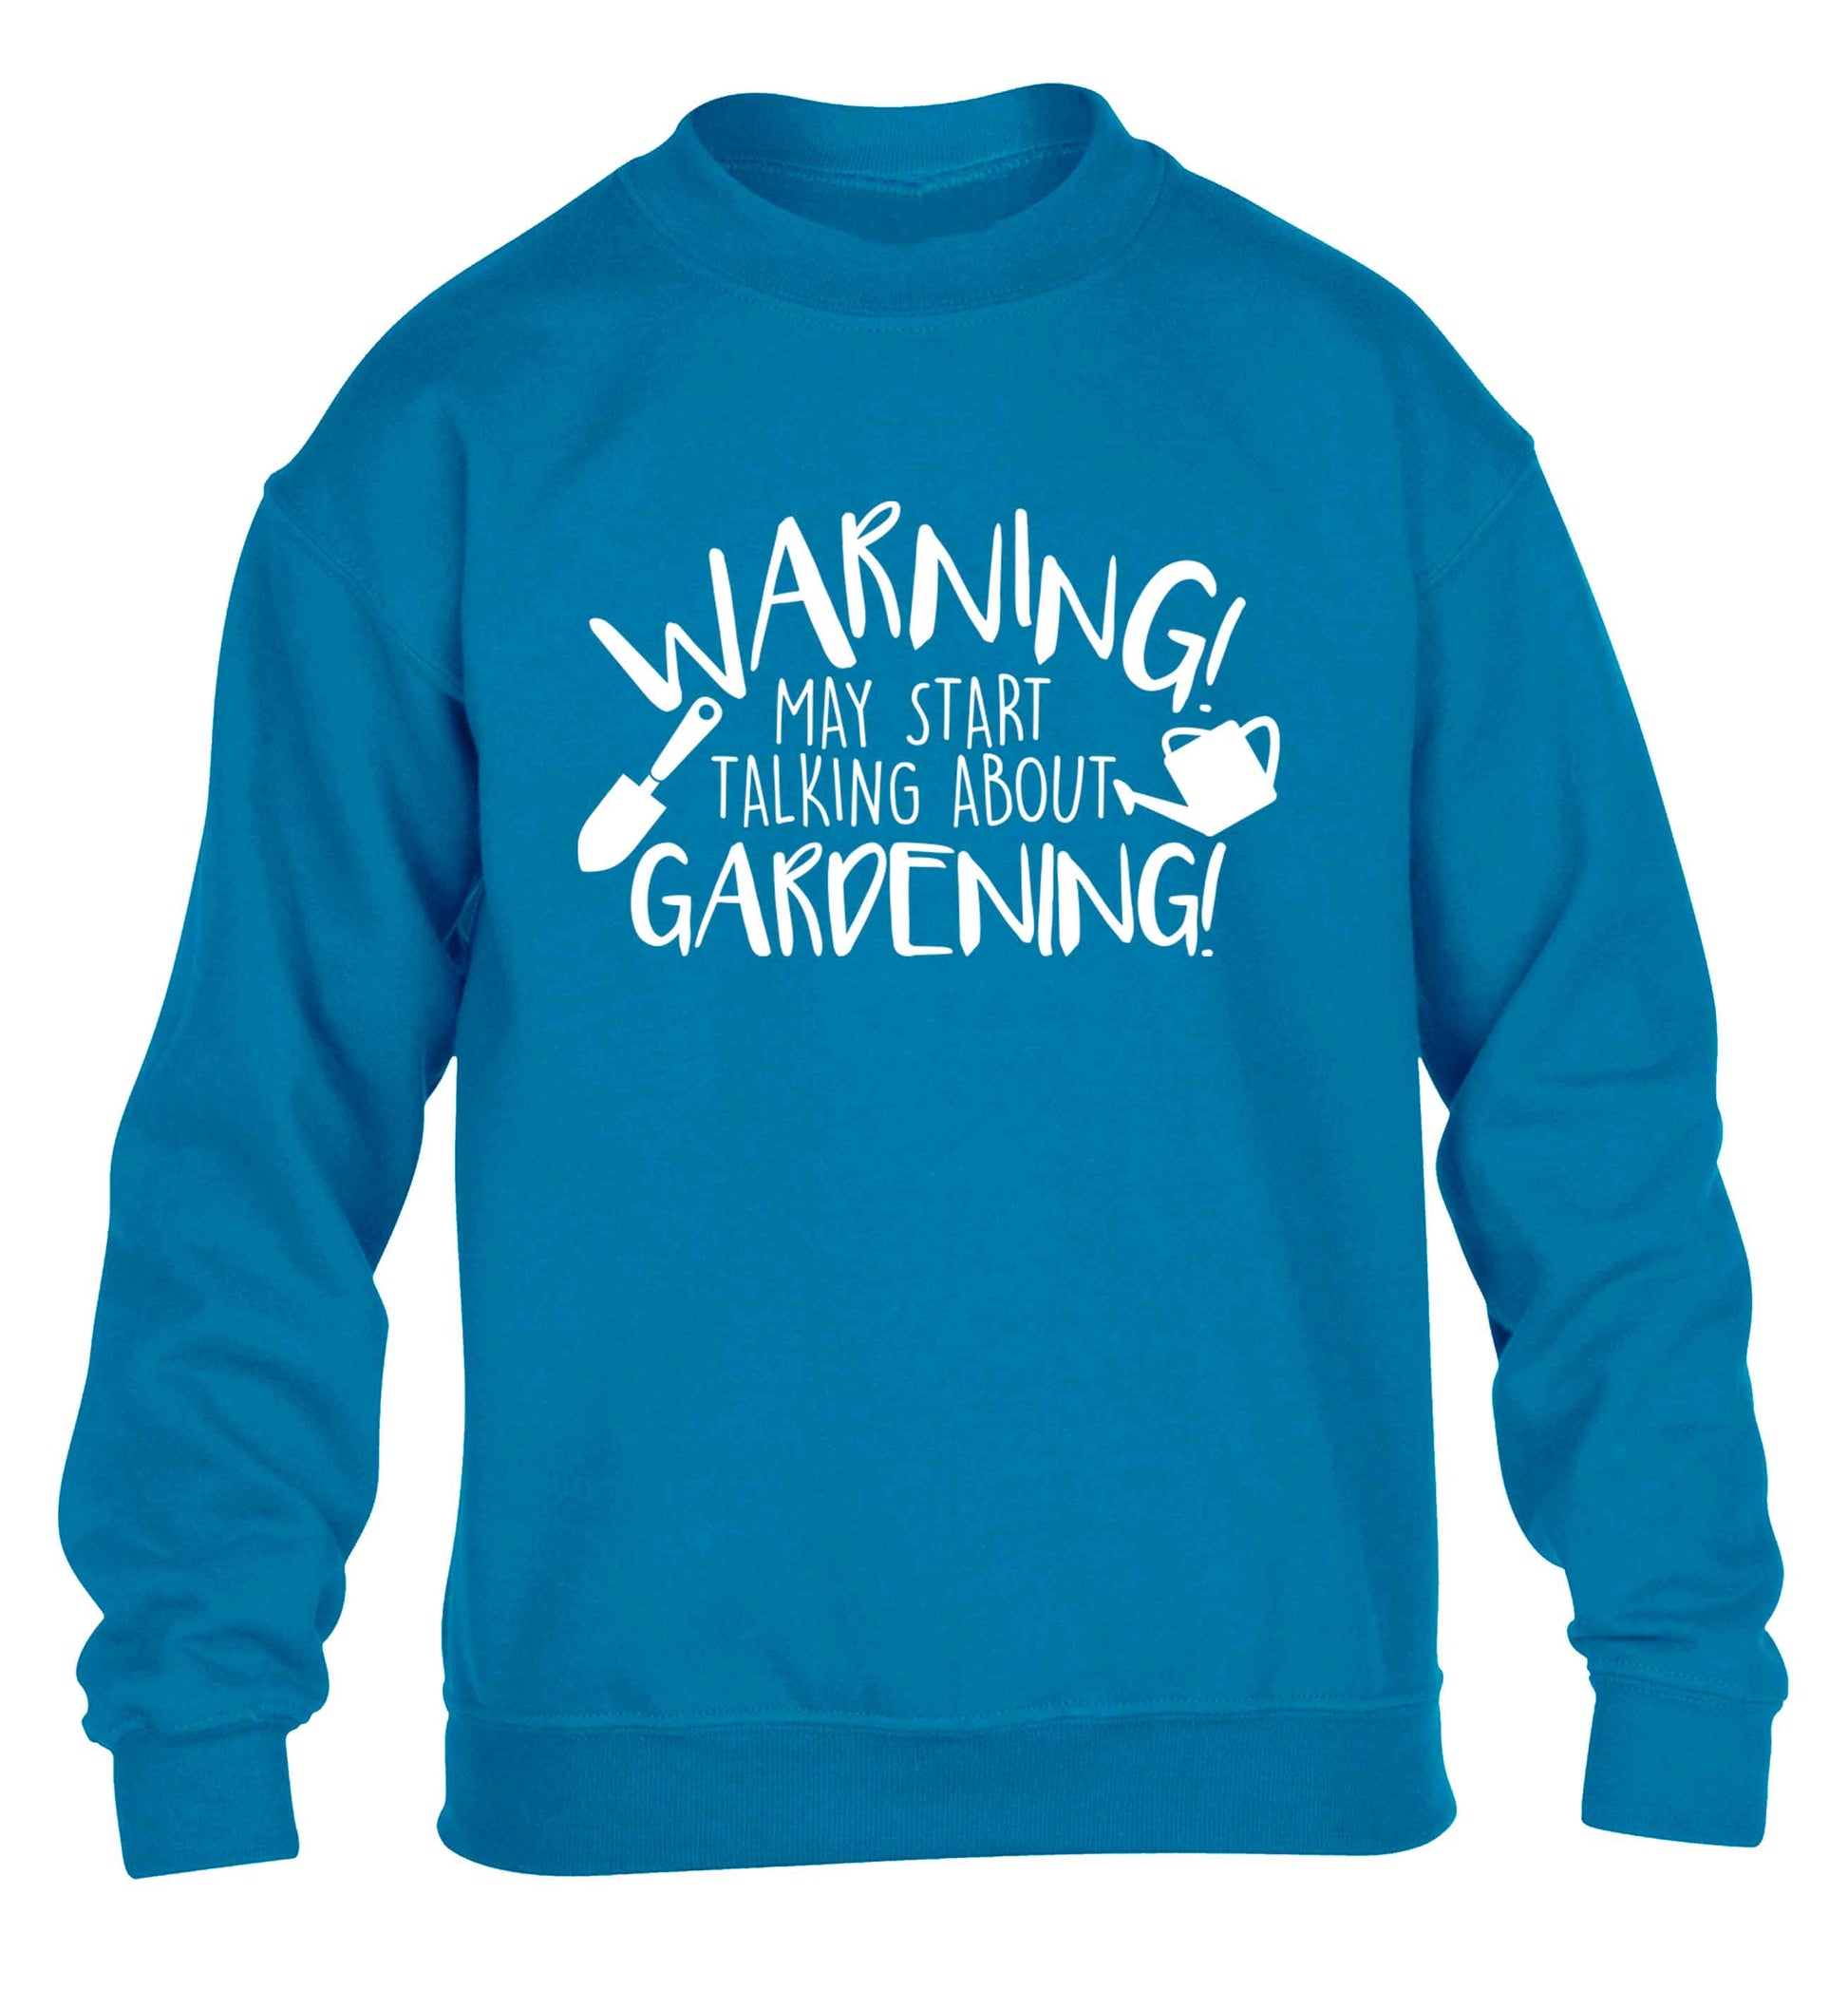 Warning may start talking about gardening children's blue sweater 12-13 Years